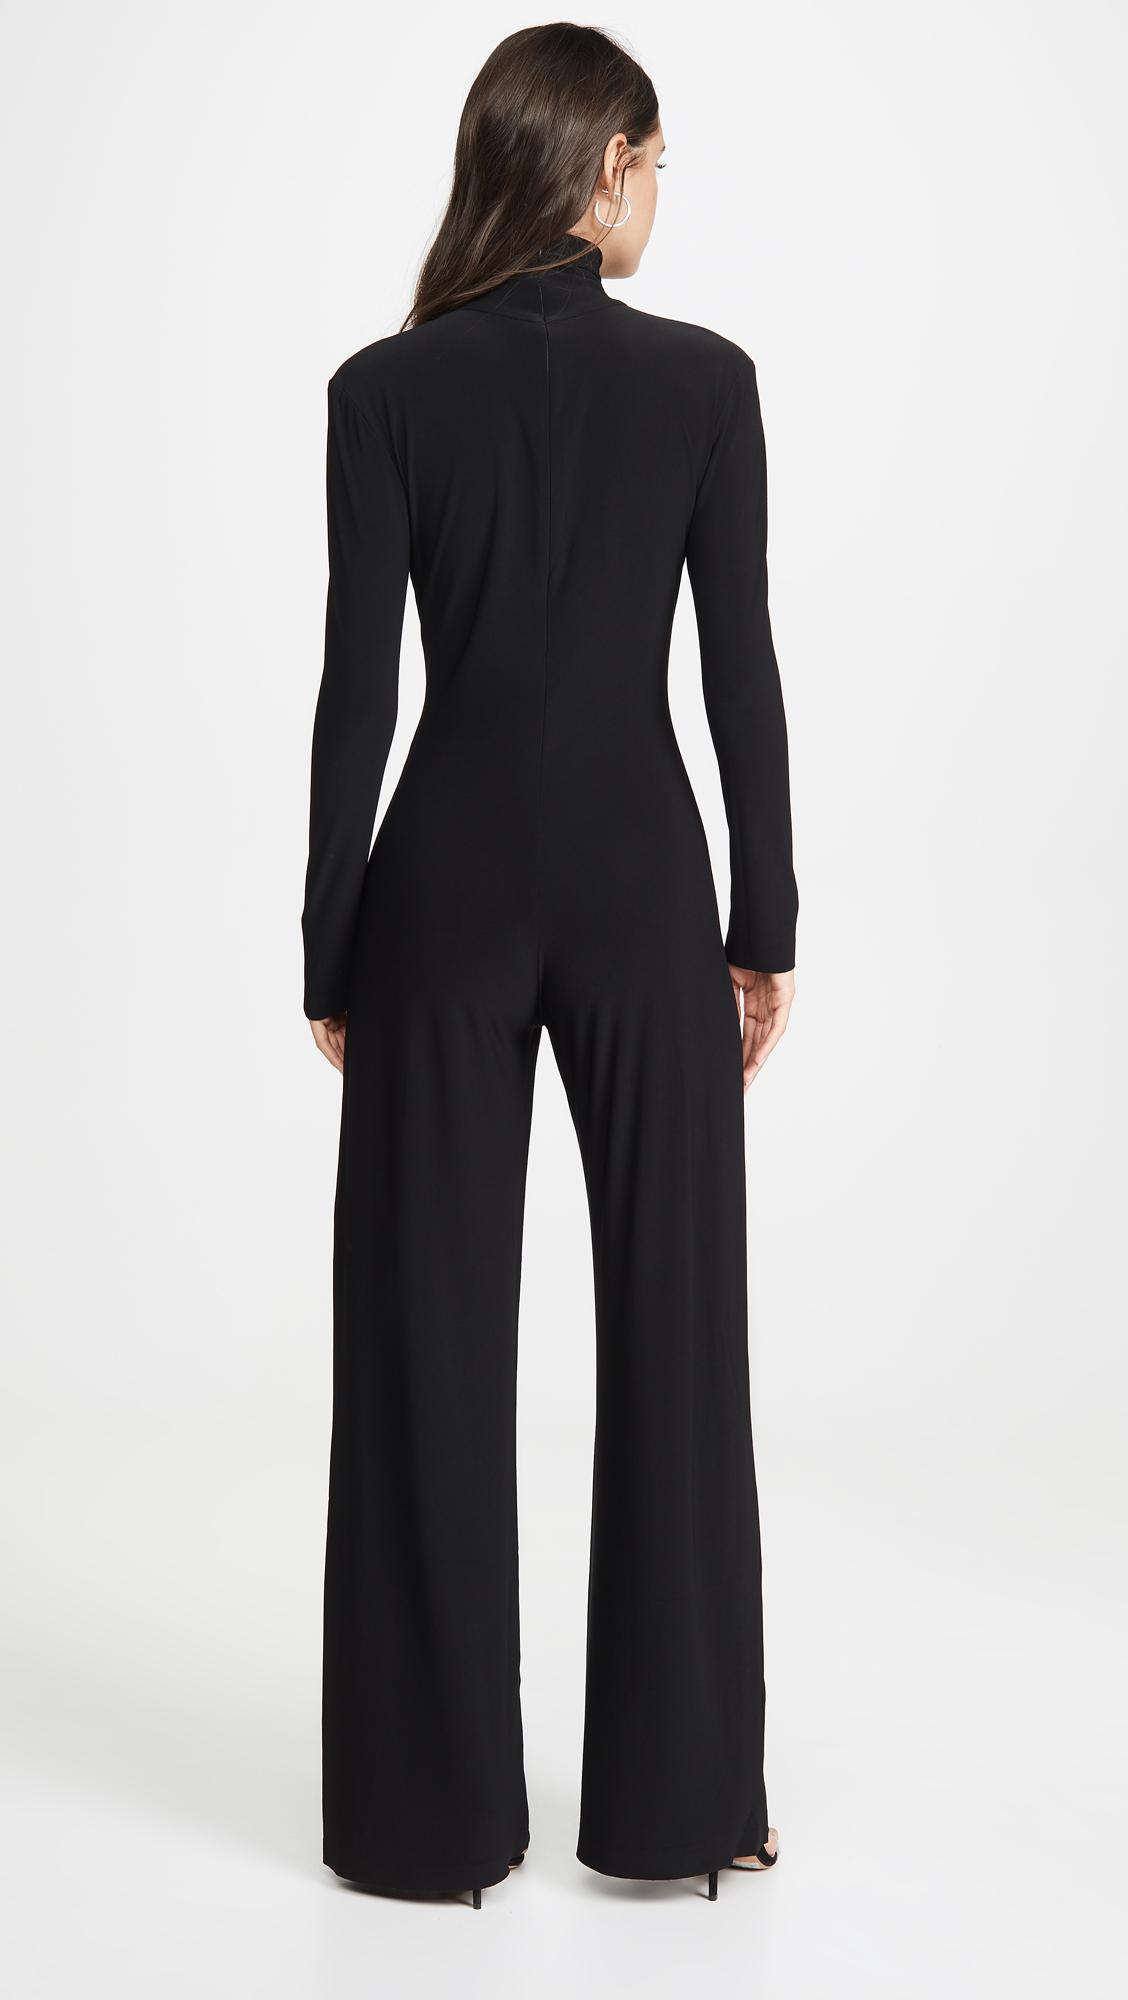 Norma Kamali Synthetic Long Sleeve Turtleneck Jumpsuit in Black - Lyst